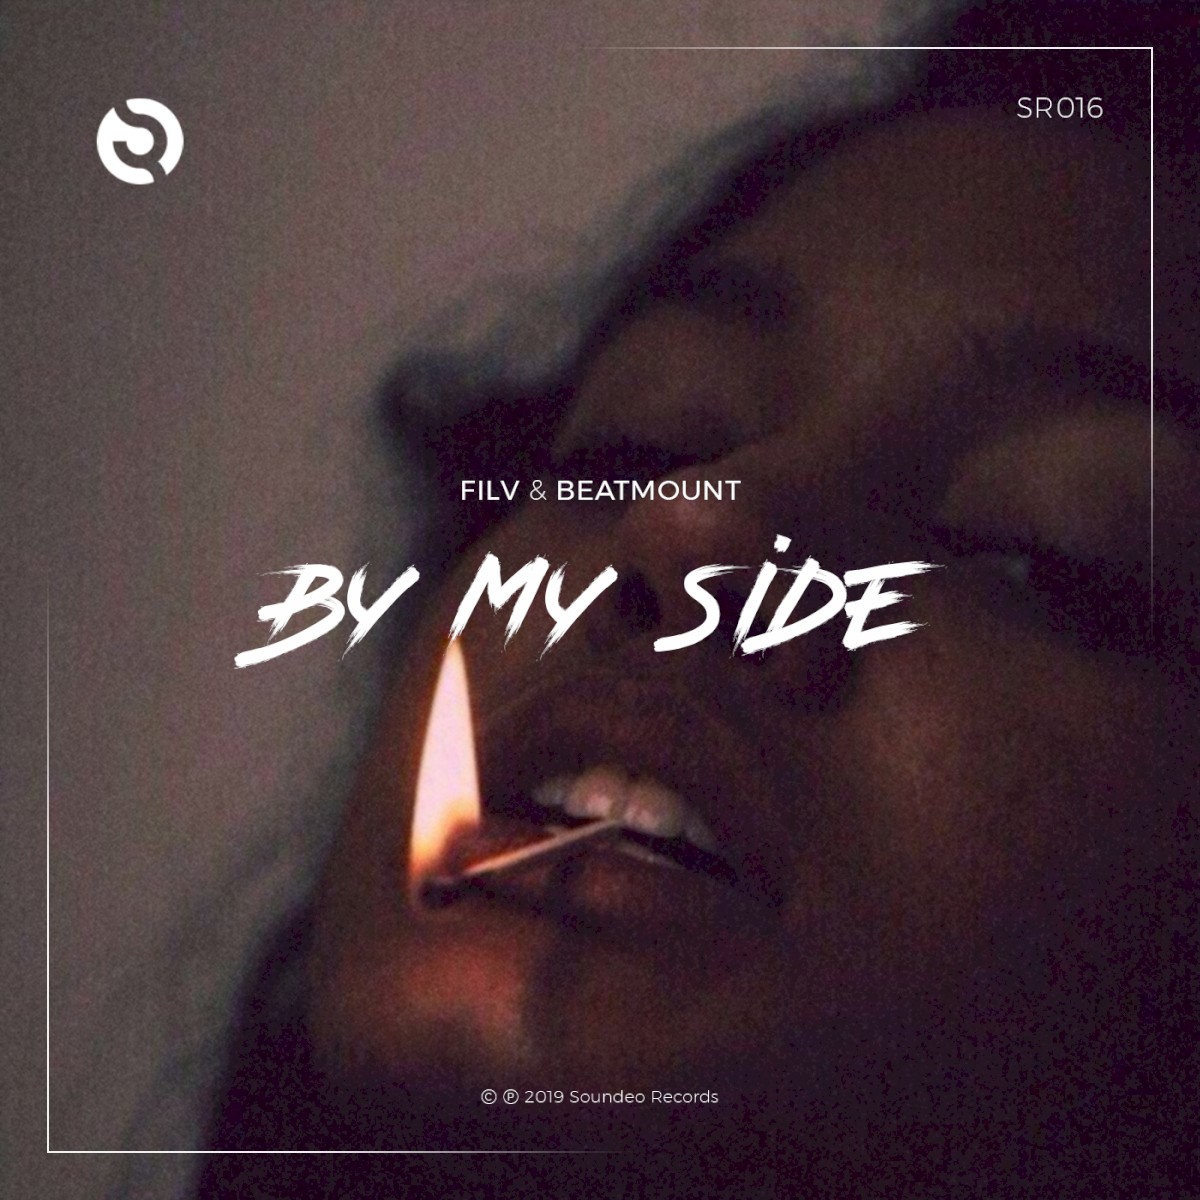 Release “Be My Side” by FILV, Beatmount - Cover Art - MusicBrainz